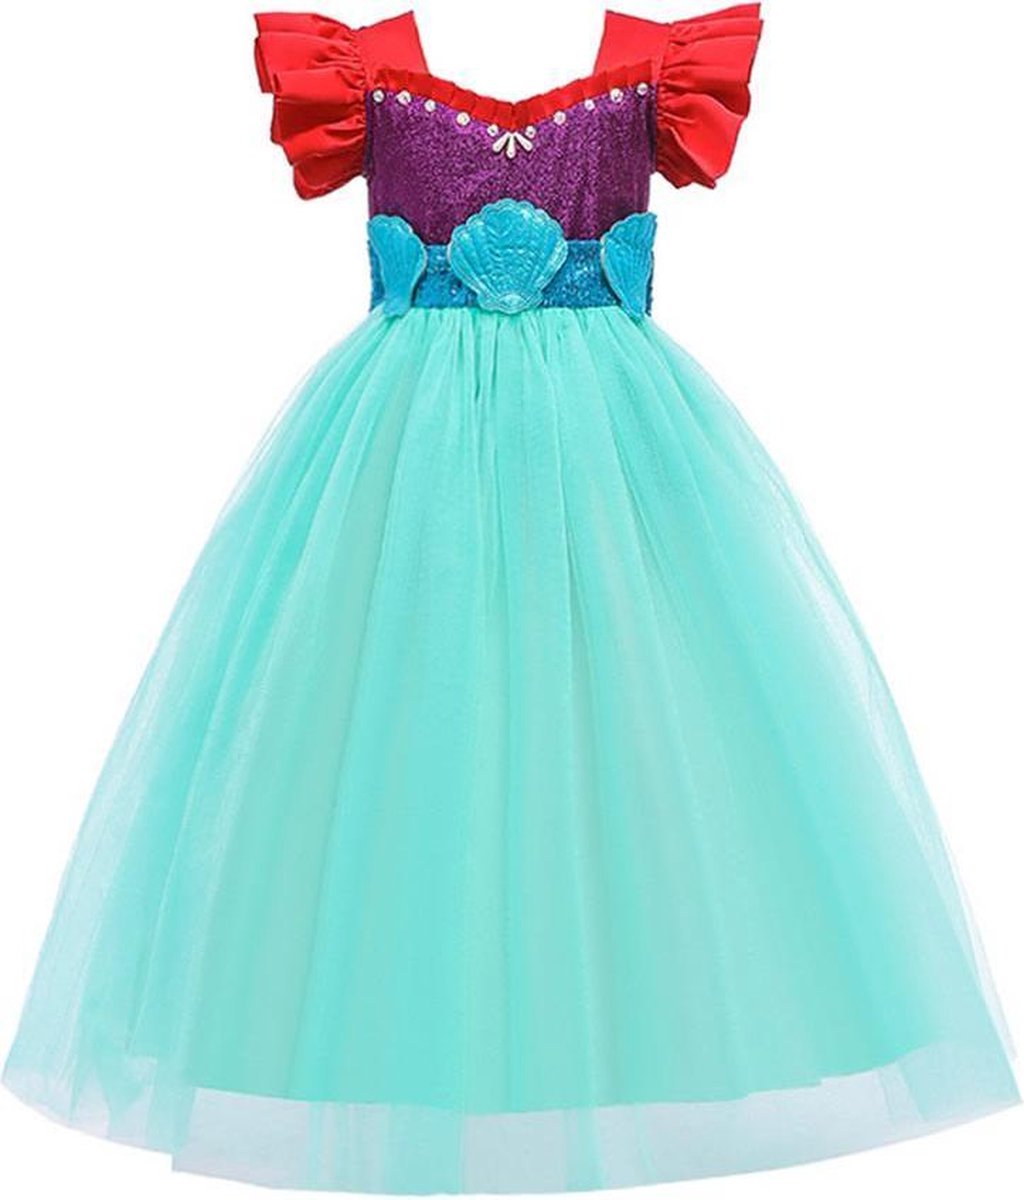 Prinses - Zeemeermin Ariel jurk - De Kleine Zeemeermin - Prinsessenjurk - Verkleedkleding - Zeegroen - 122/128 (6/7 jaar)